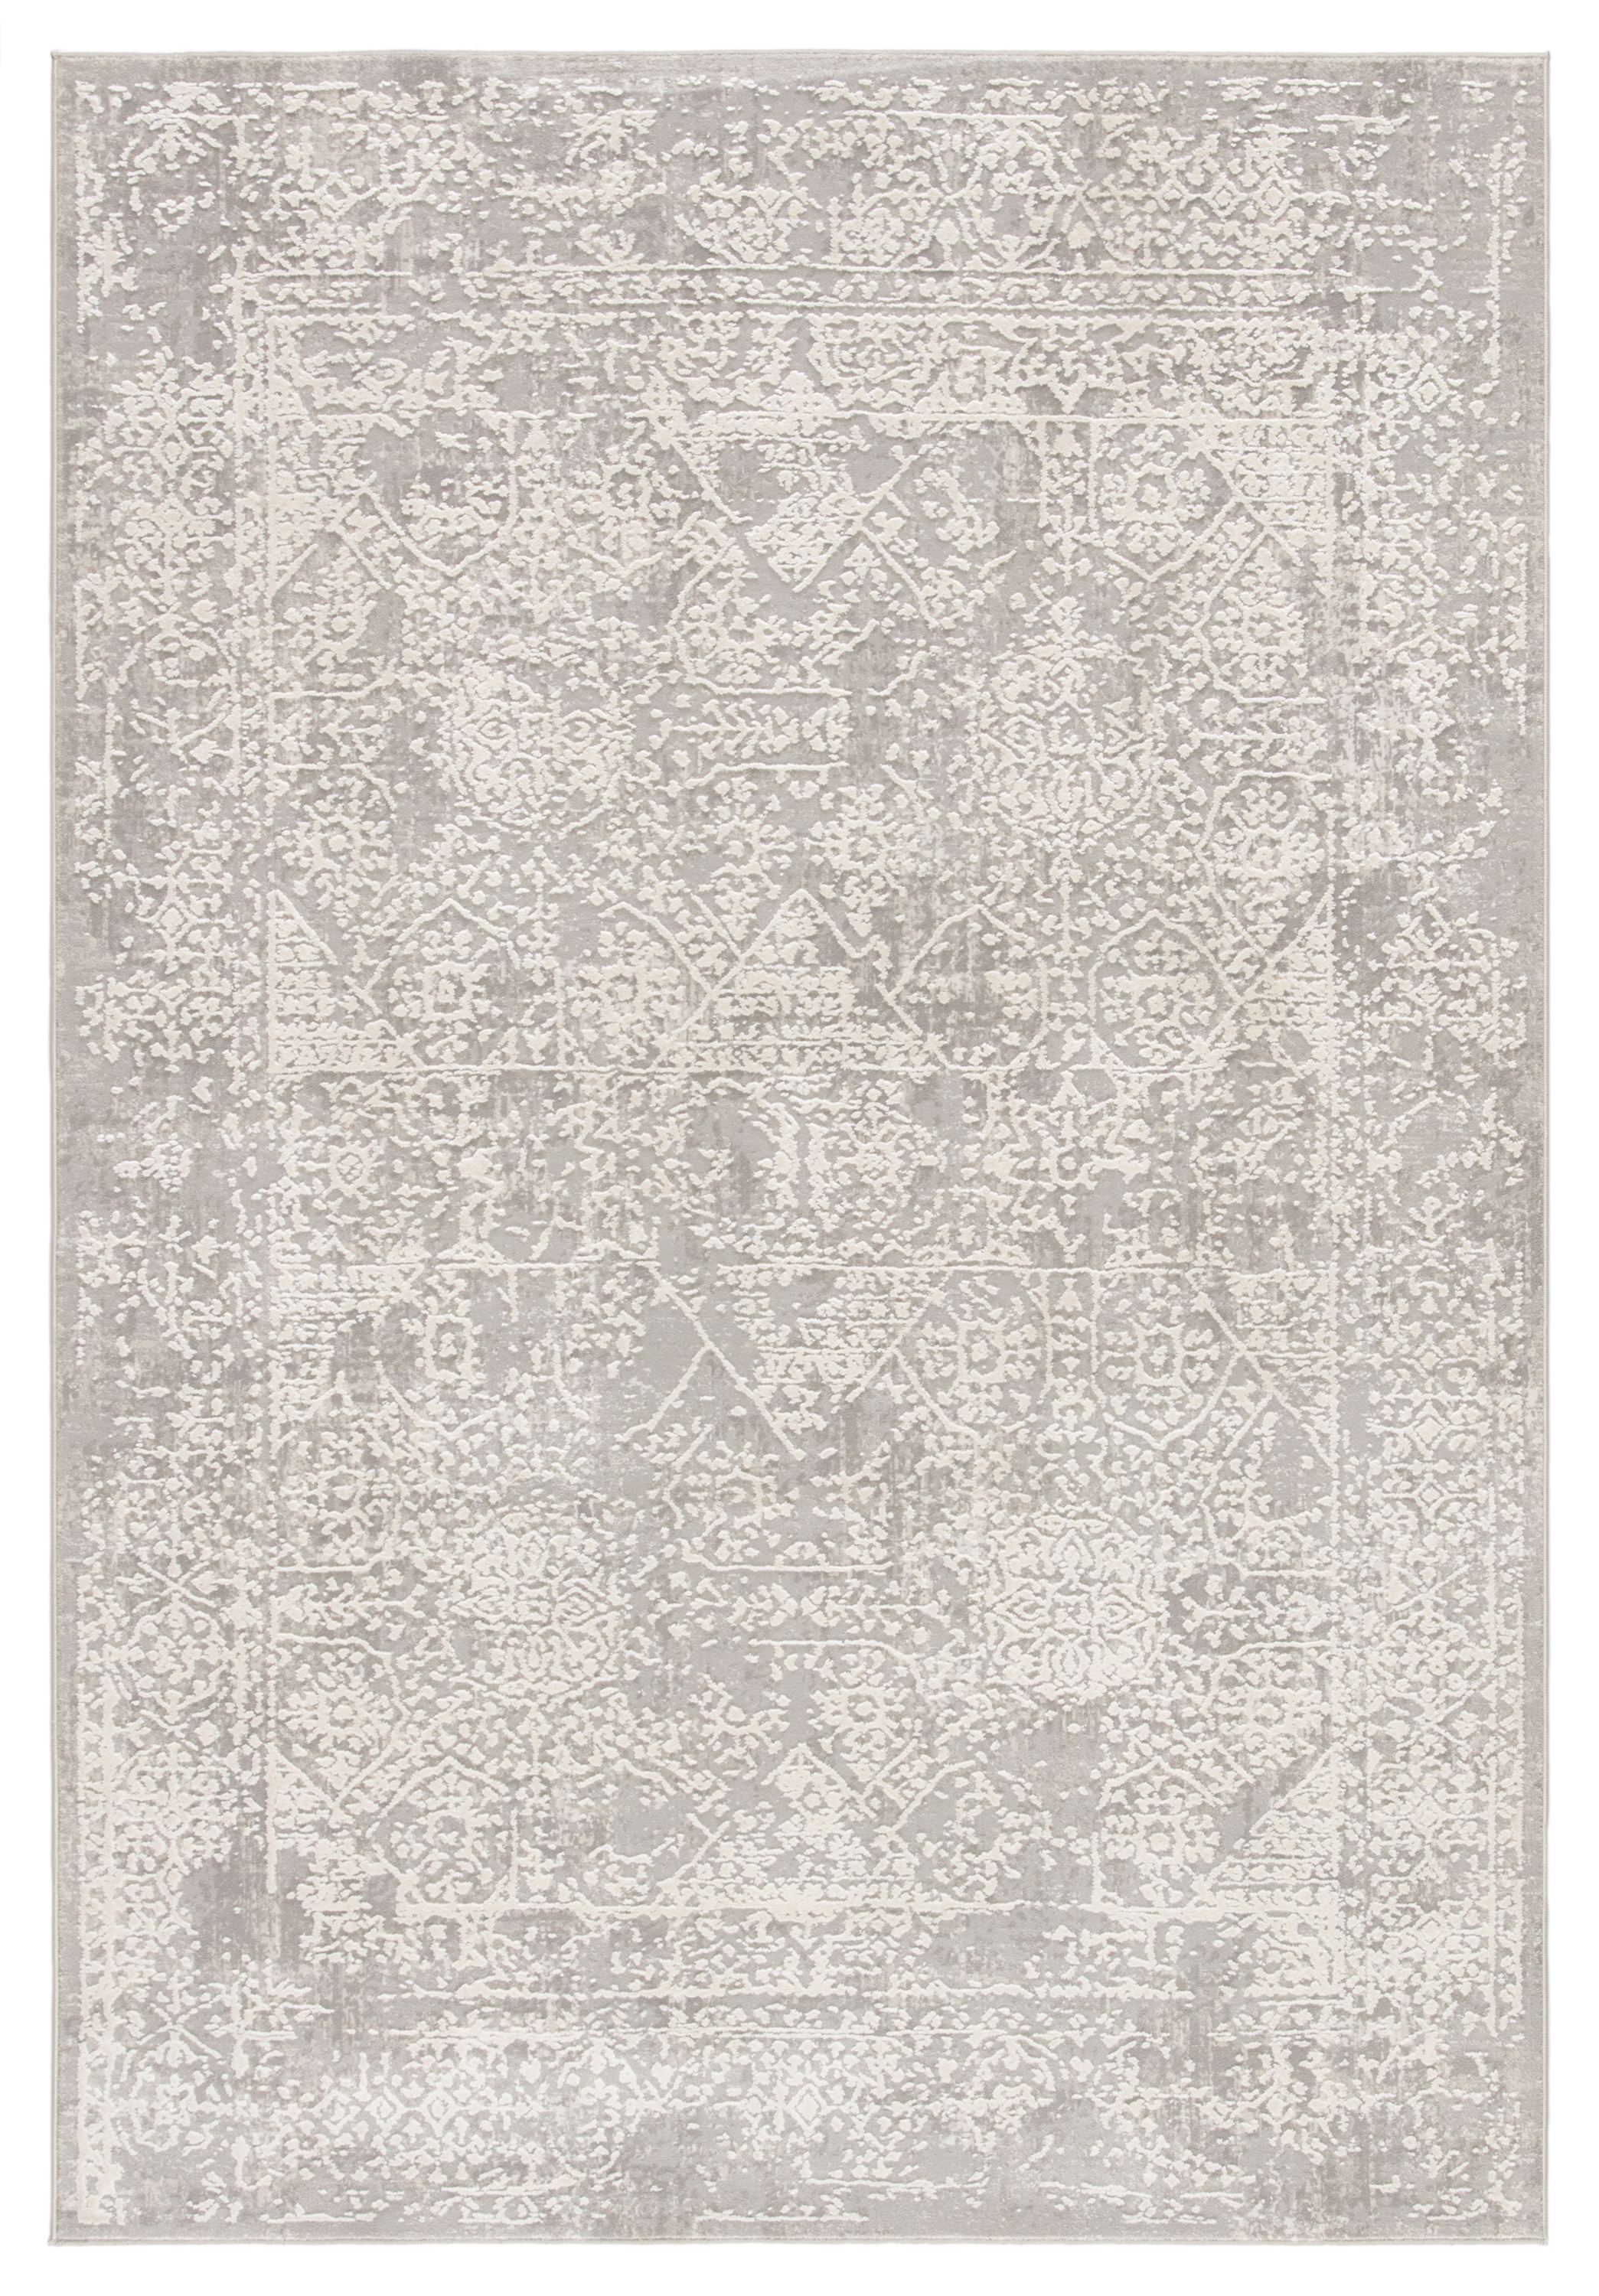 Lianna Abstract Gray/ White Area Rug (7'6" X 9'6") - Image 0